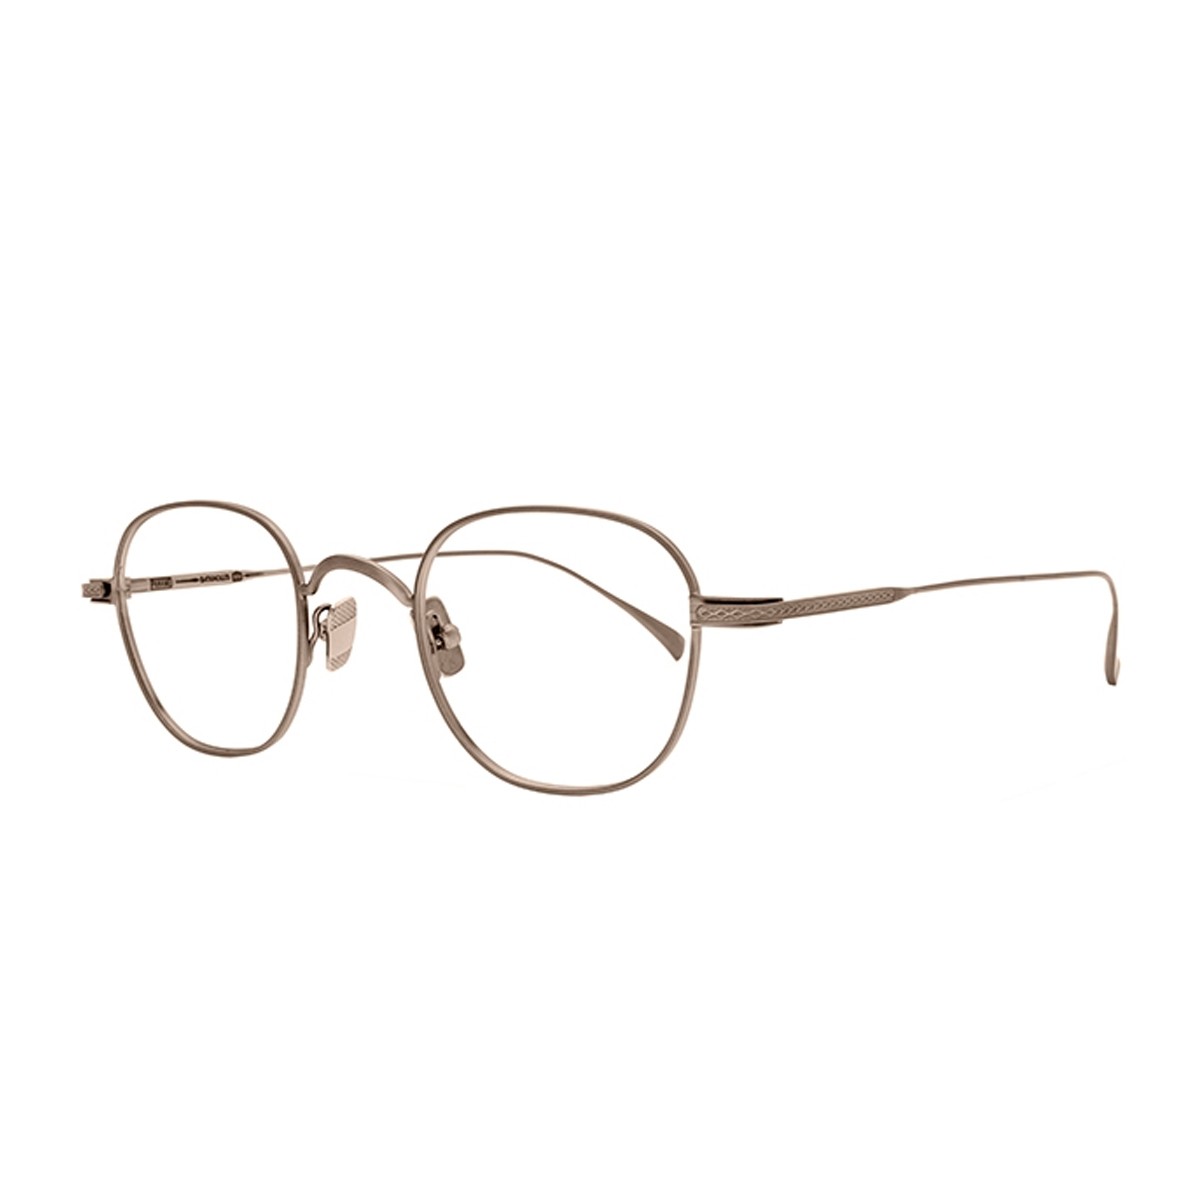 Paname Brochant C3 | Women's eyeglasses